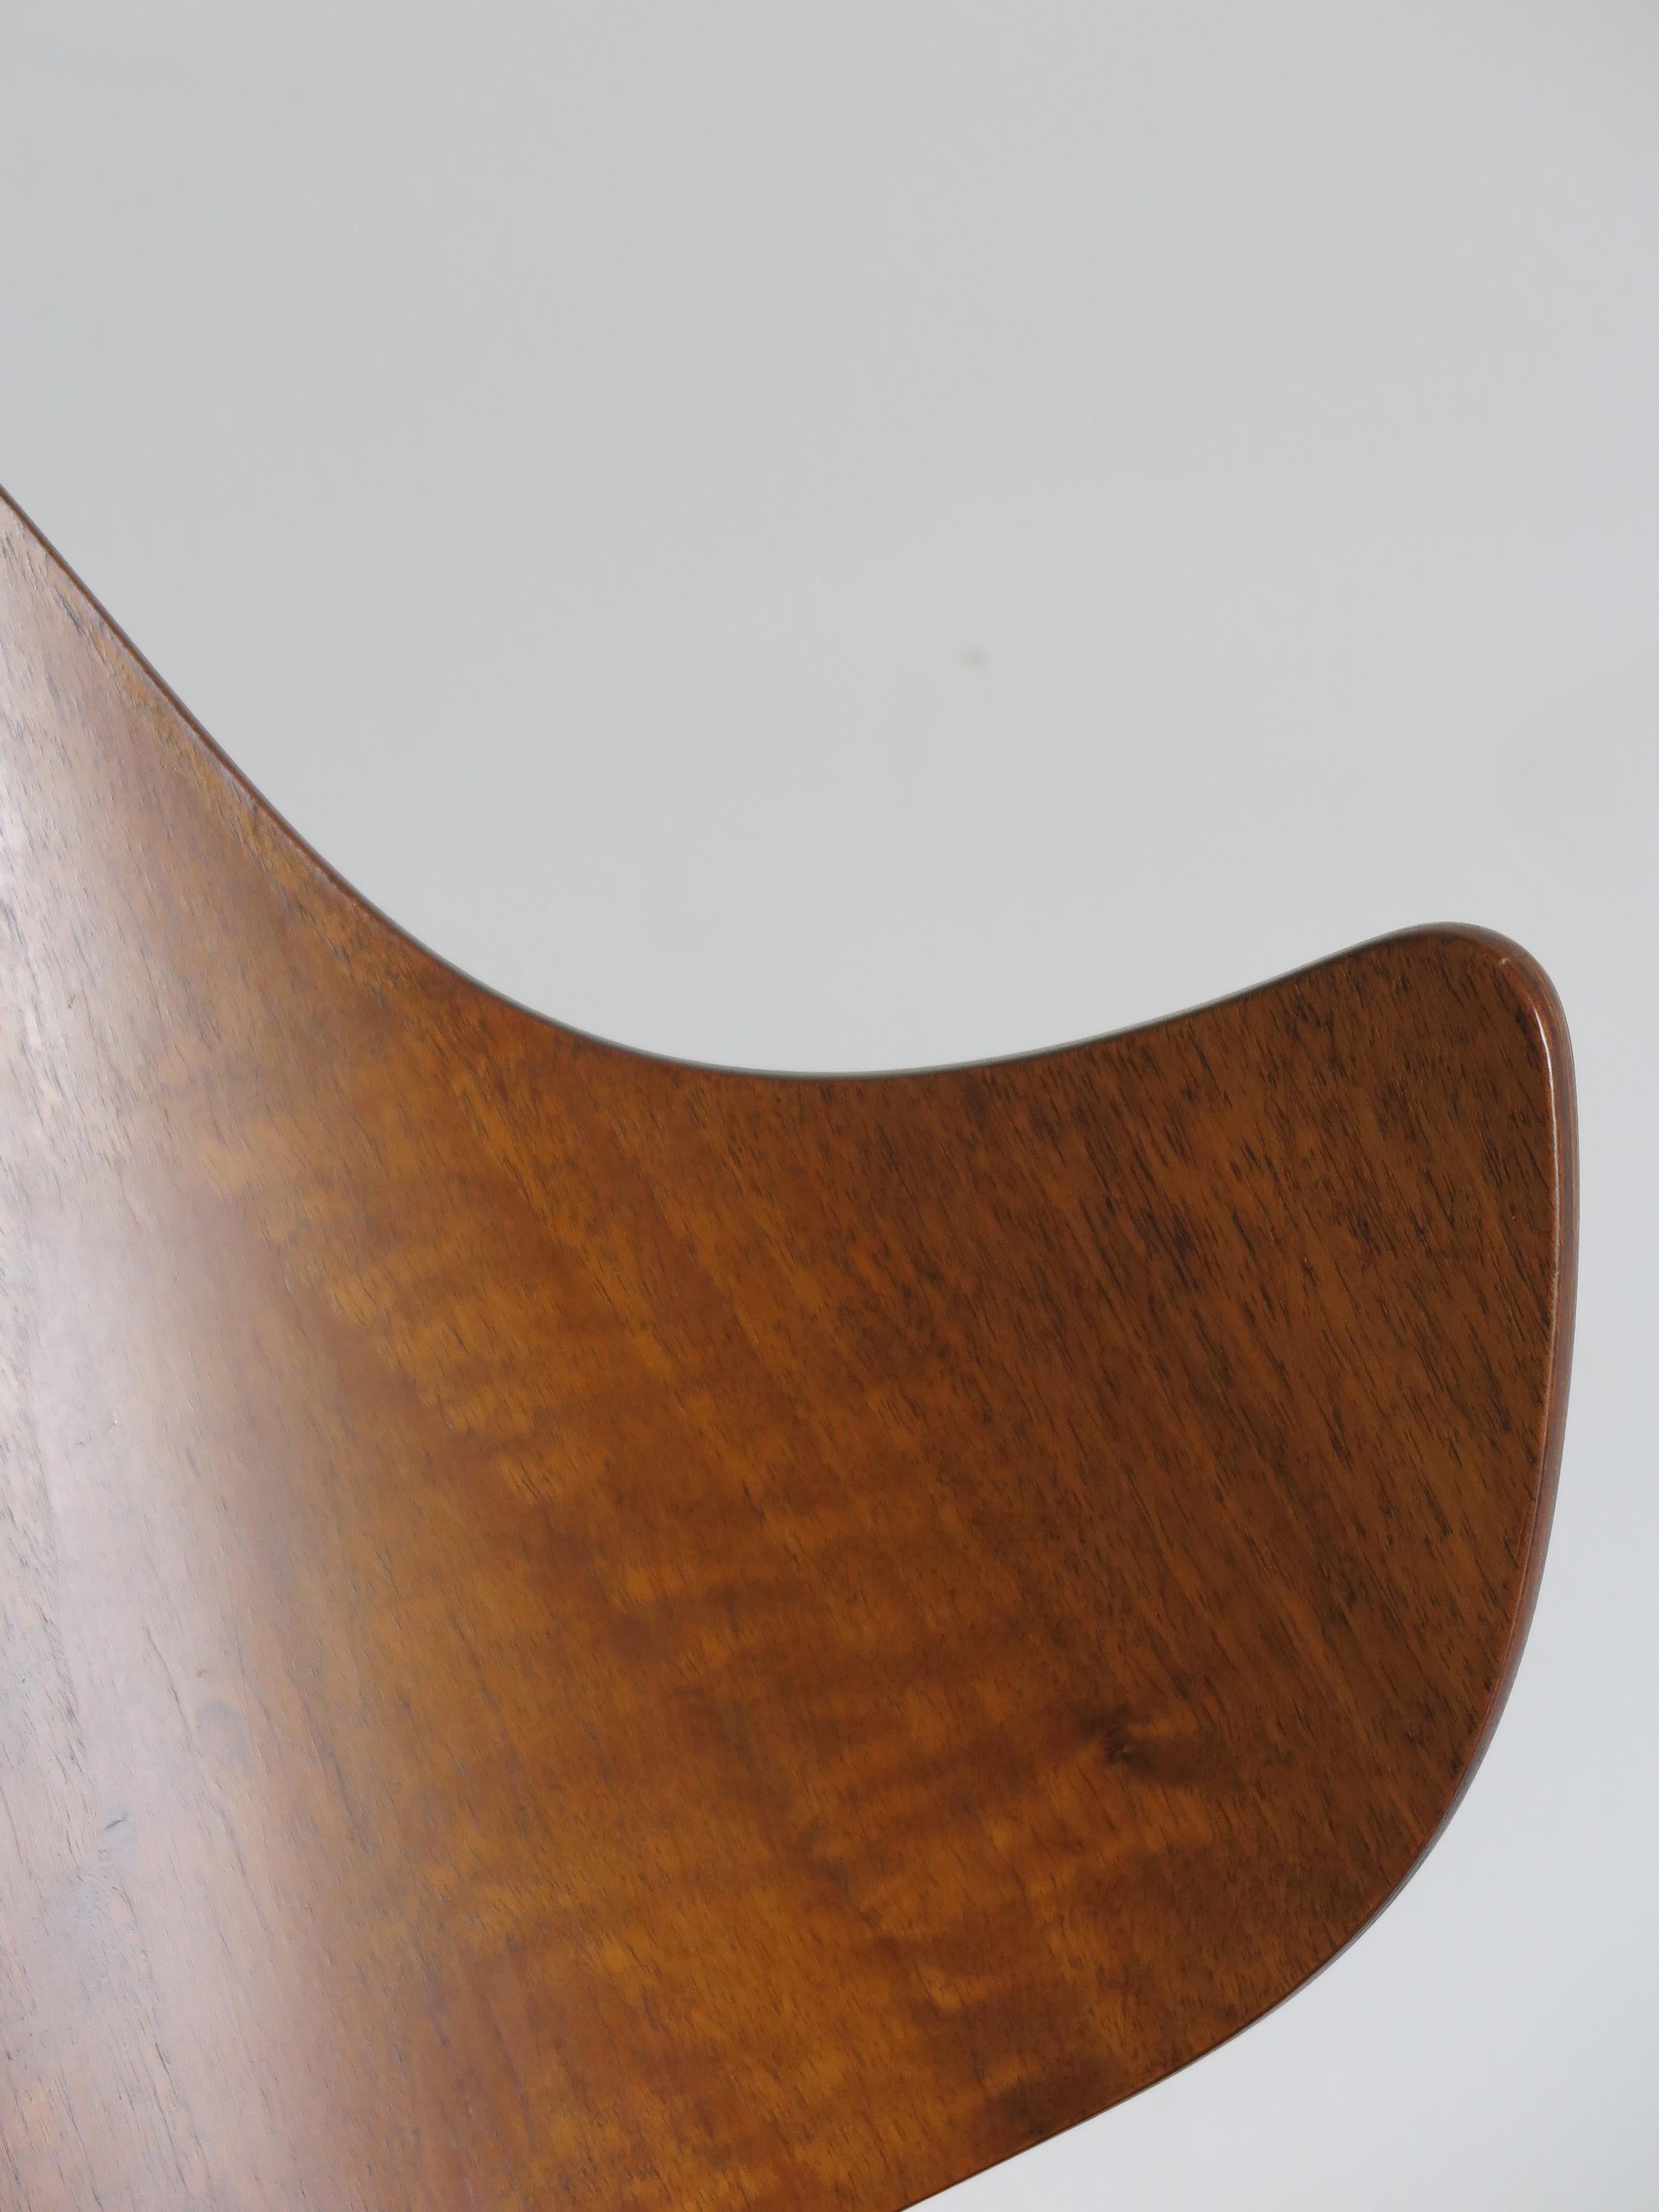 Jens Hjorth Scandinavian Midcentury Modern Wood Chairs Armchairs, 1950s 9